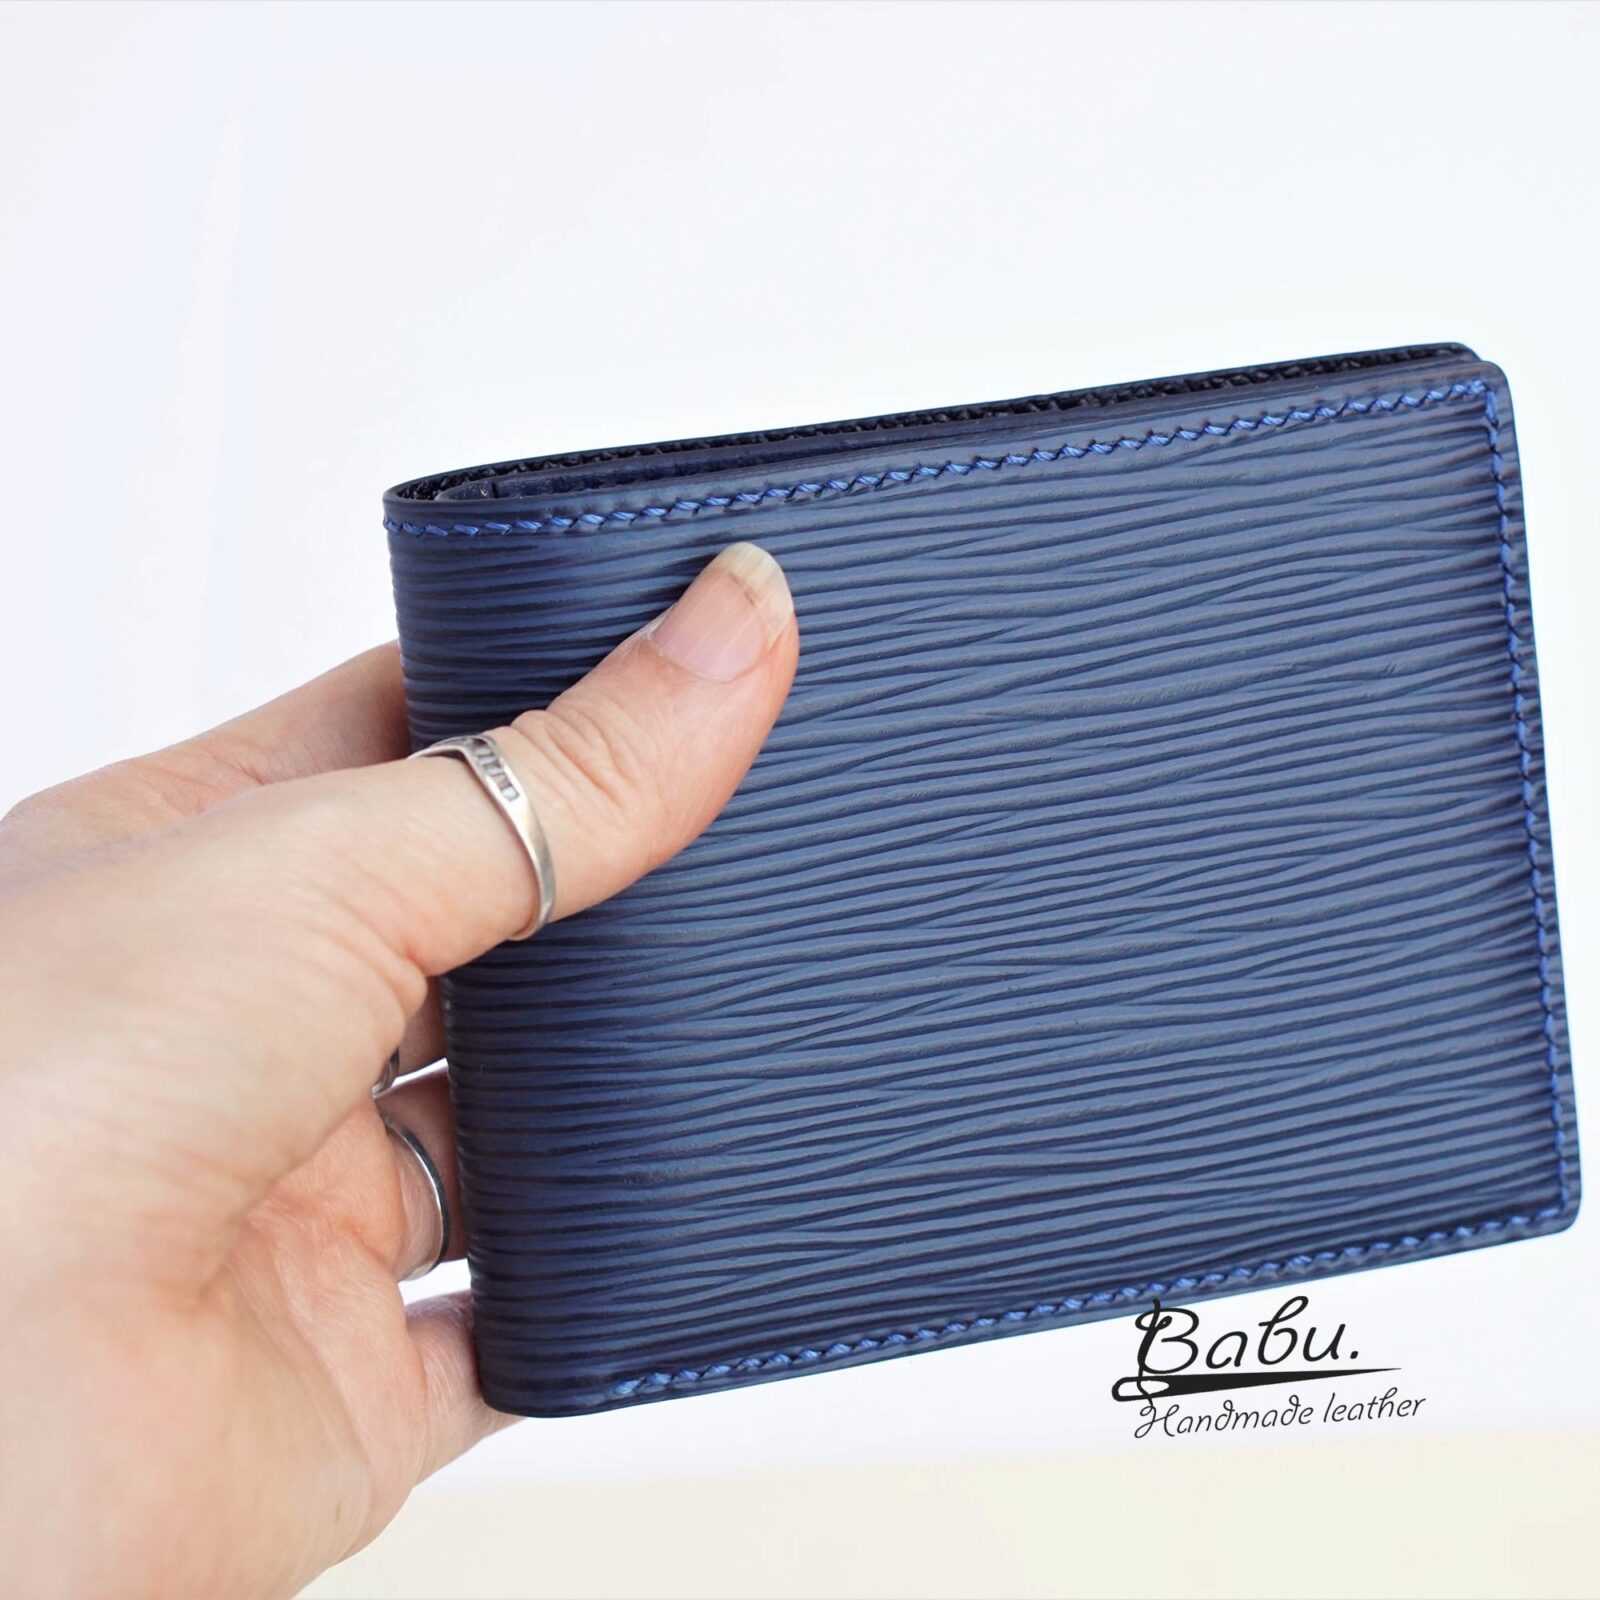 Fauré Le Page - Etendard 6cc Wallet - Embroidered Jacquard Blue Saga & Navy Leather